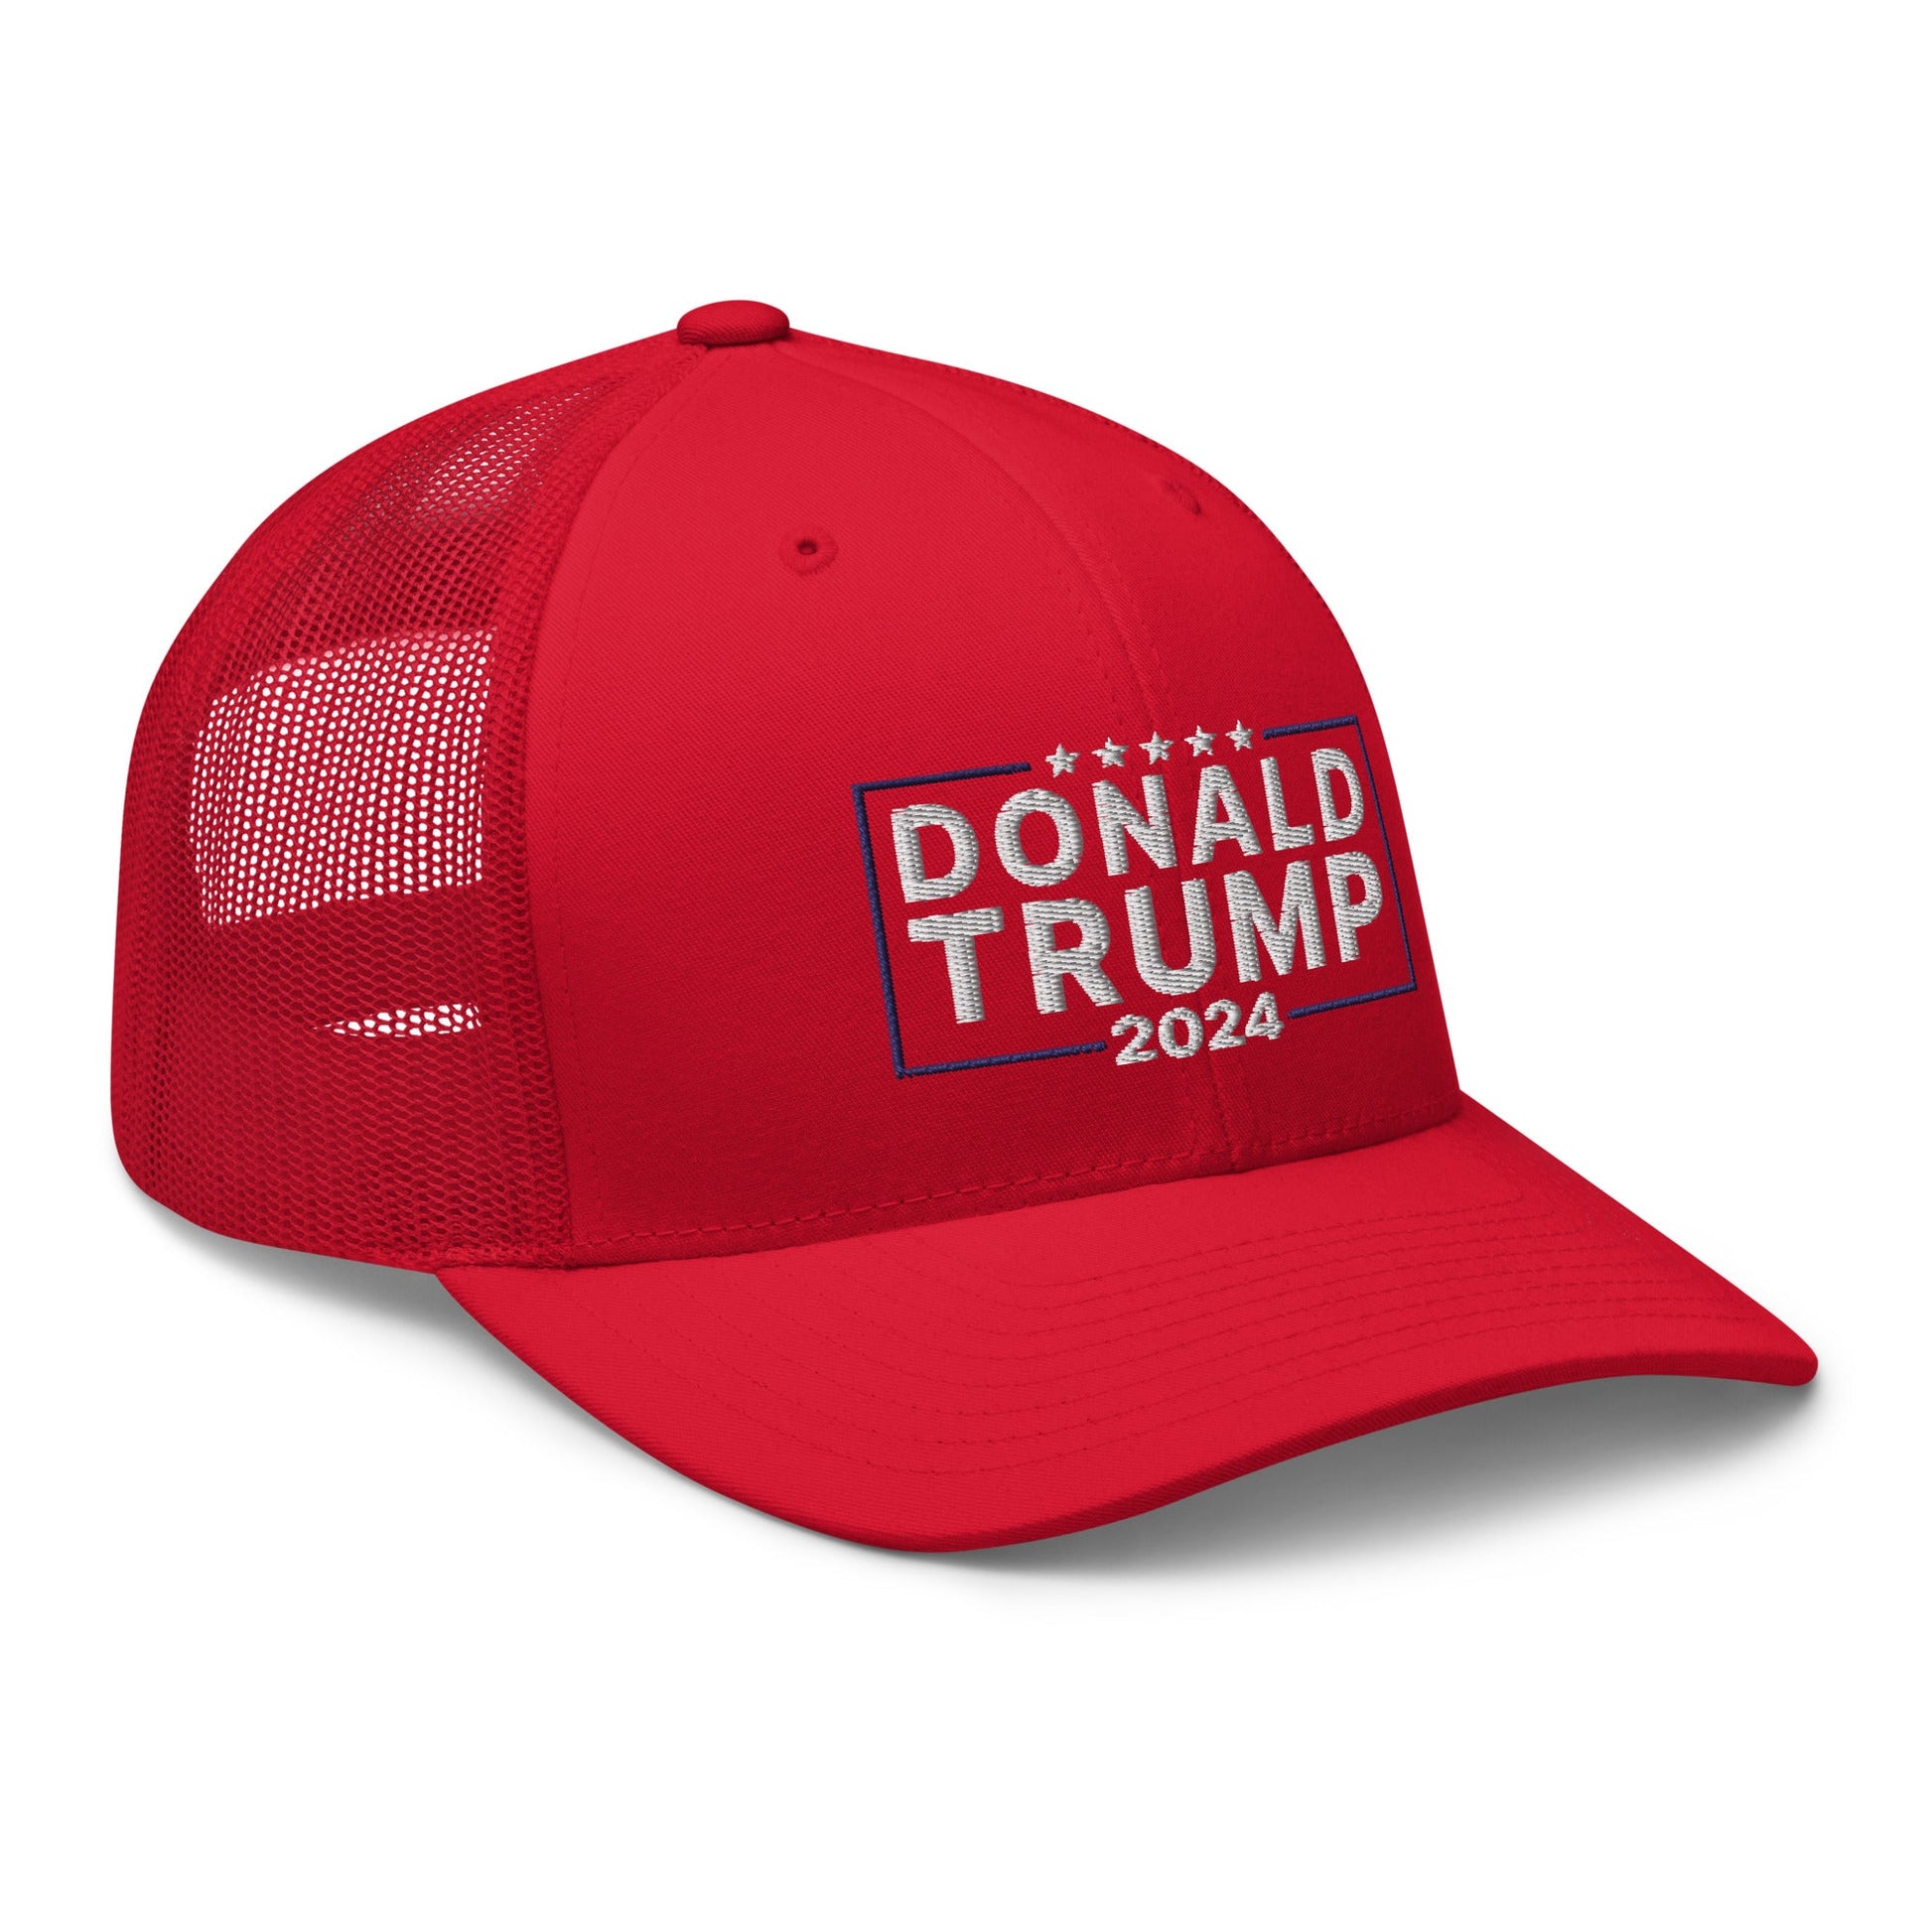 2024 Donald Trump Snapback Trucker Hat Red